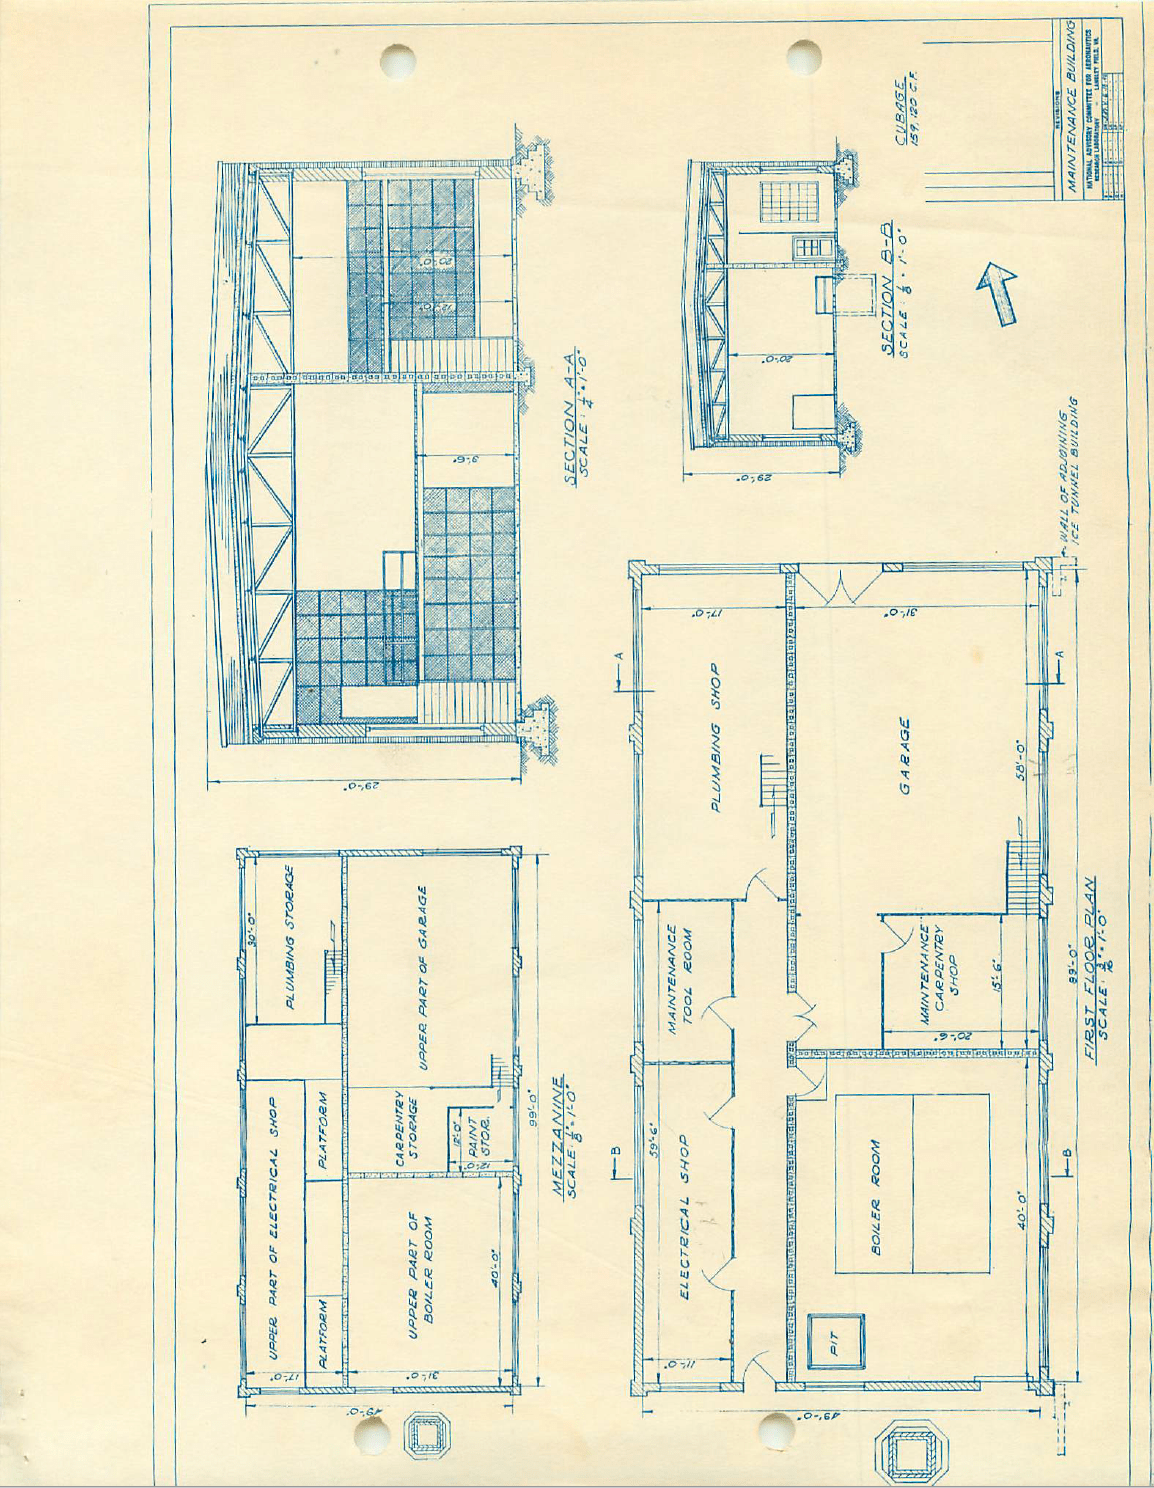 A 1942 floorplan of Building 583A.